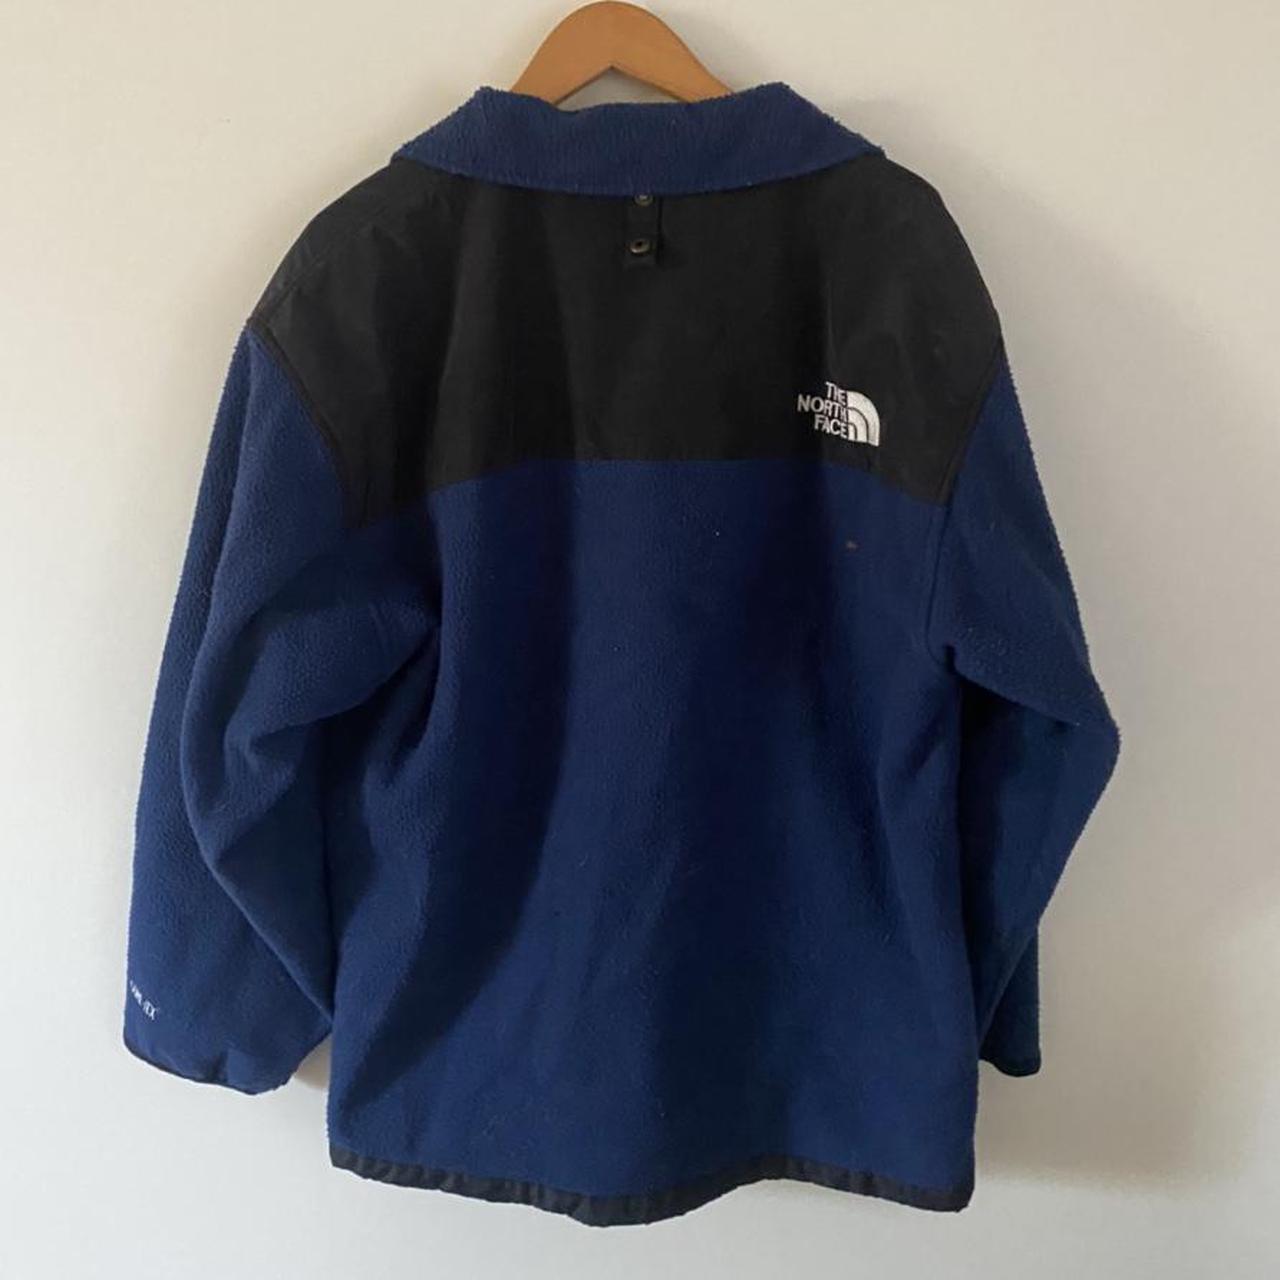 Product Image 4 - North Face denali fleece jacket
Gore-Tex
No